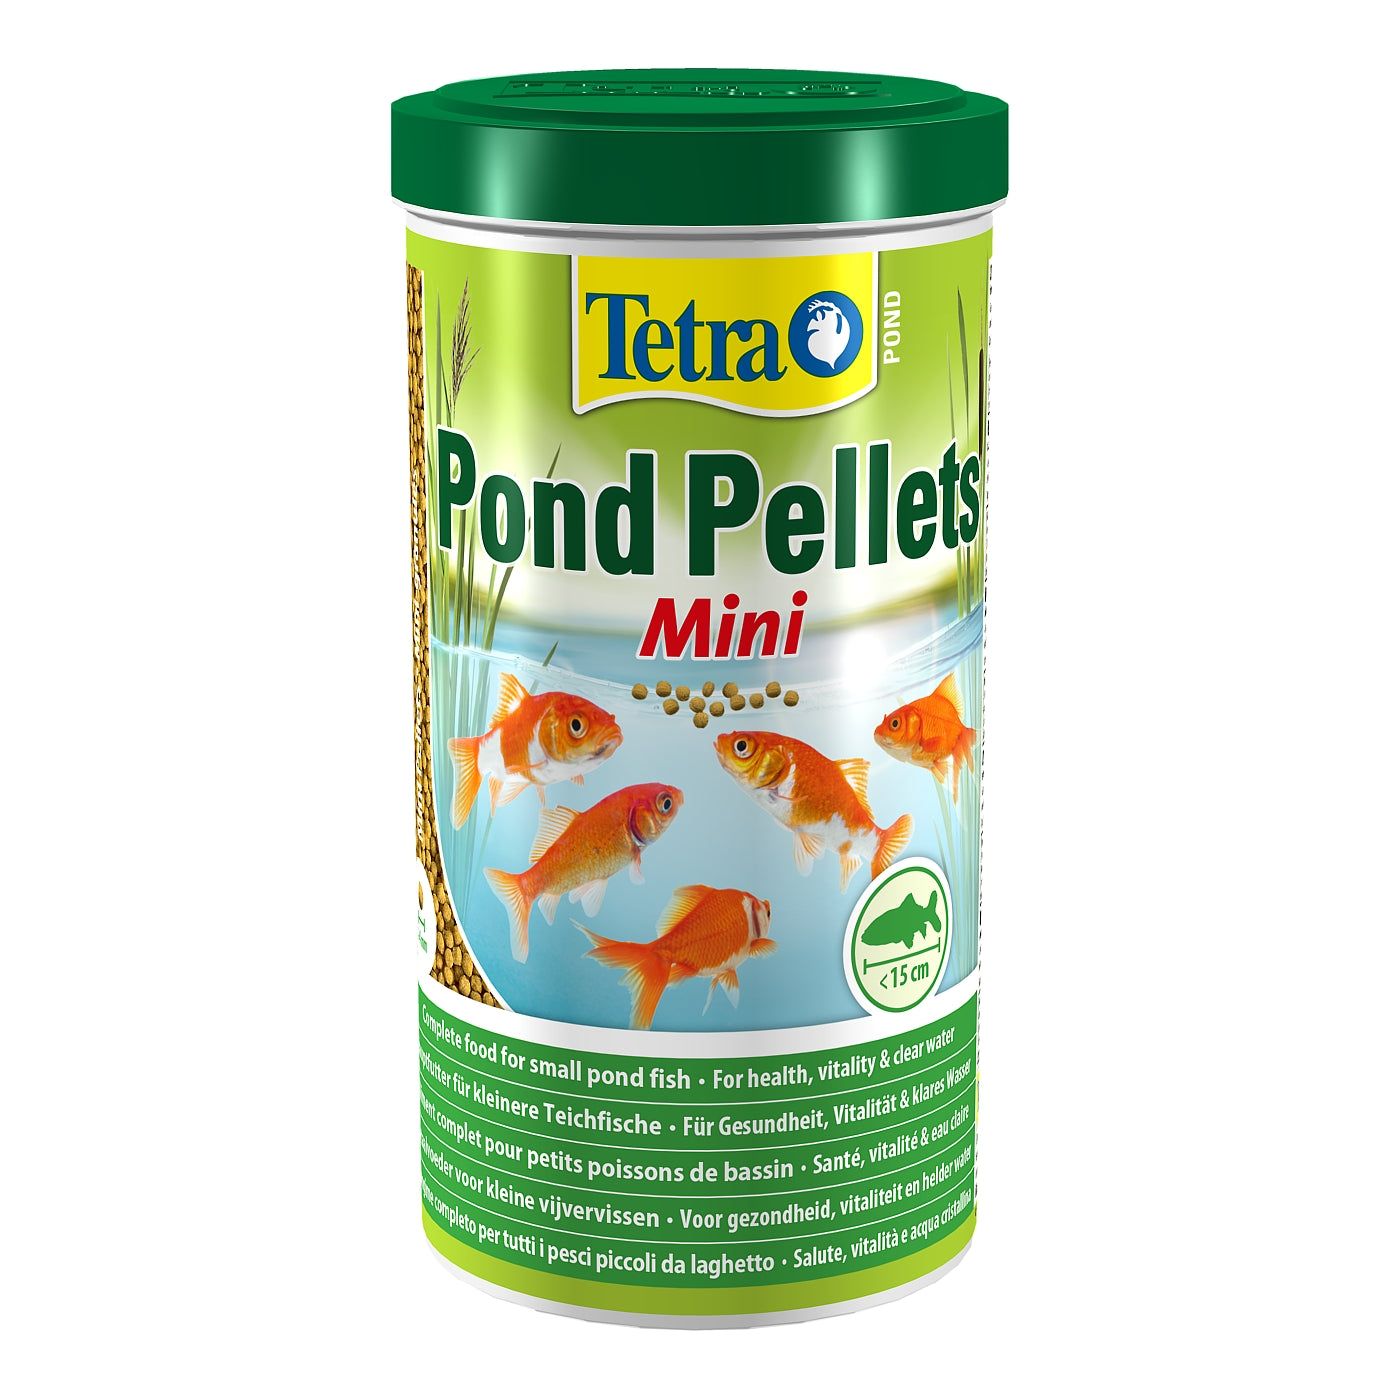 Tetra - Pond Pellets Mini - 260g